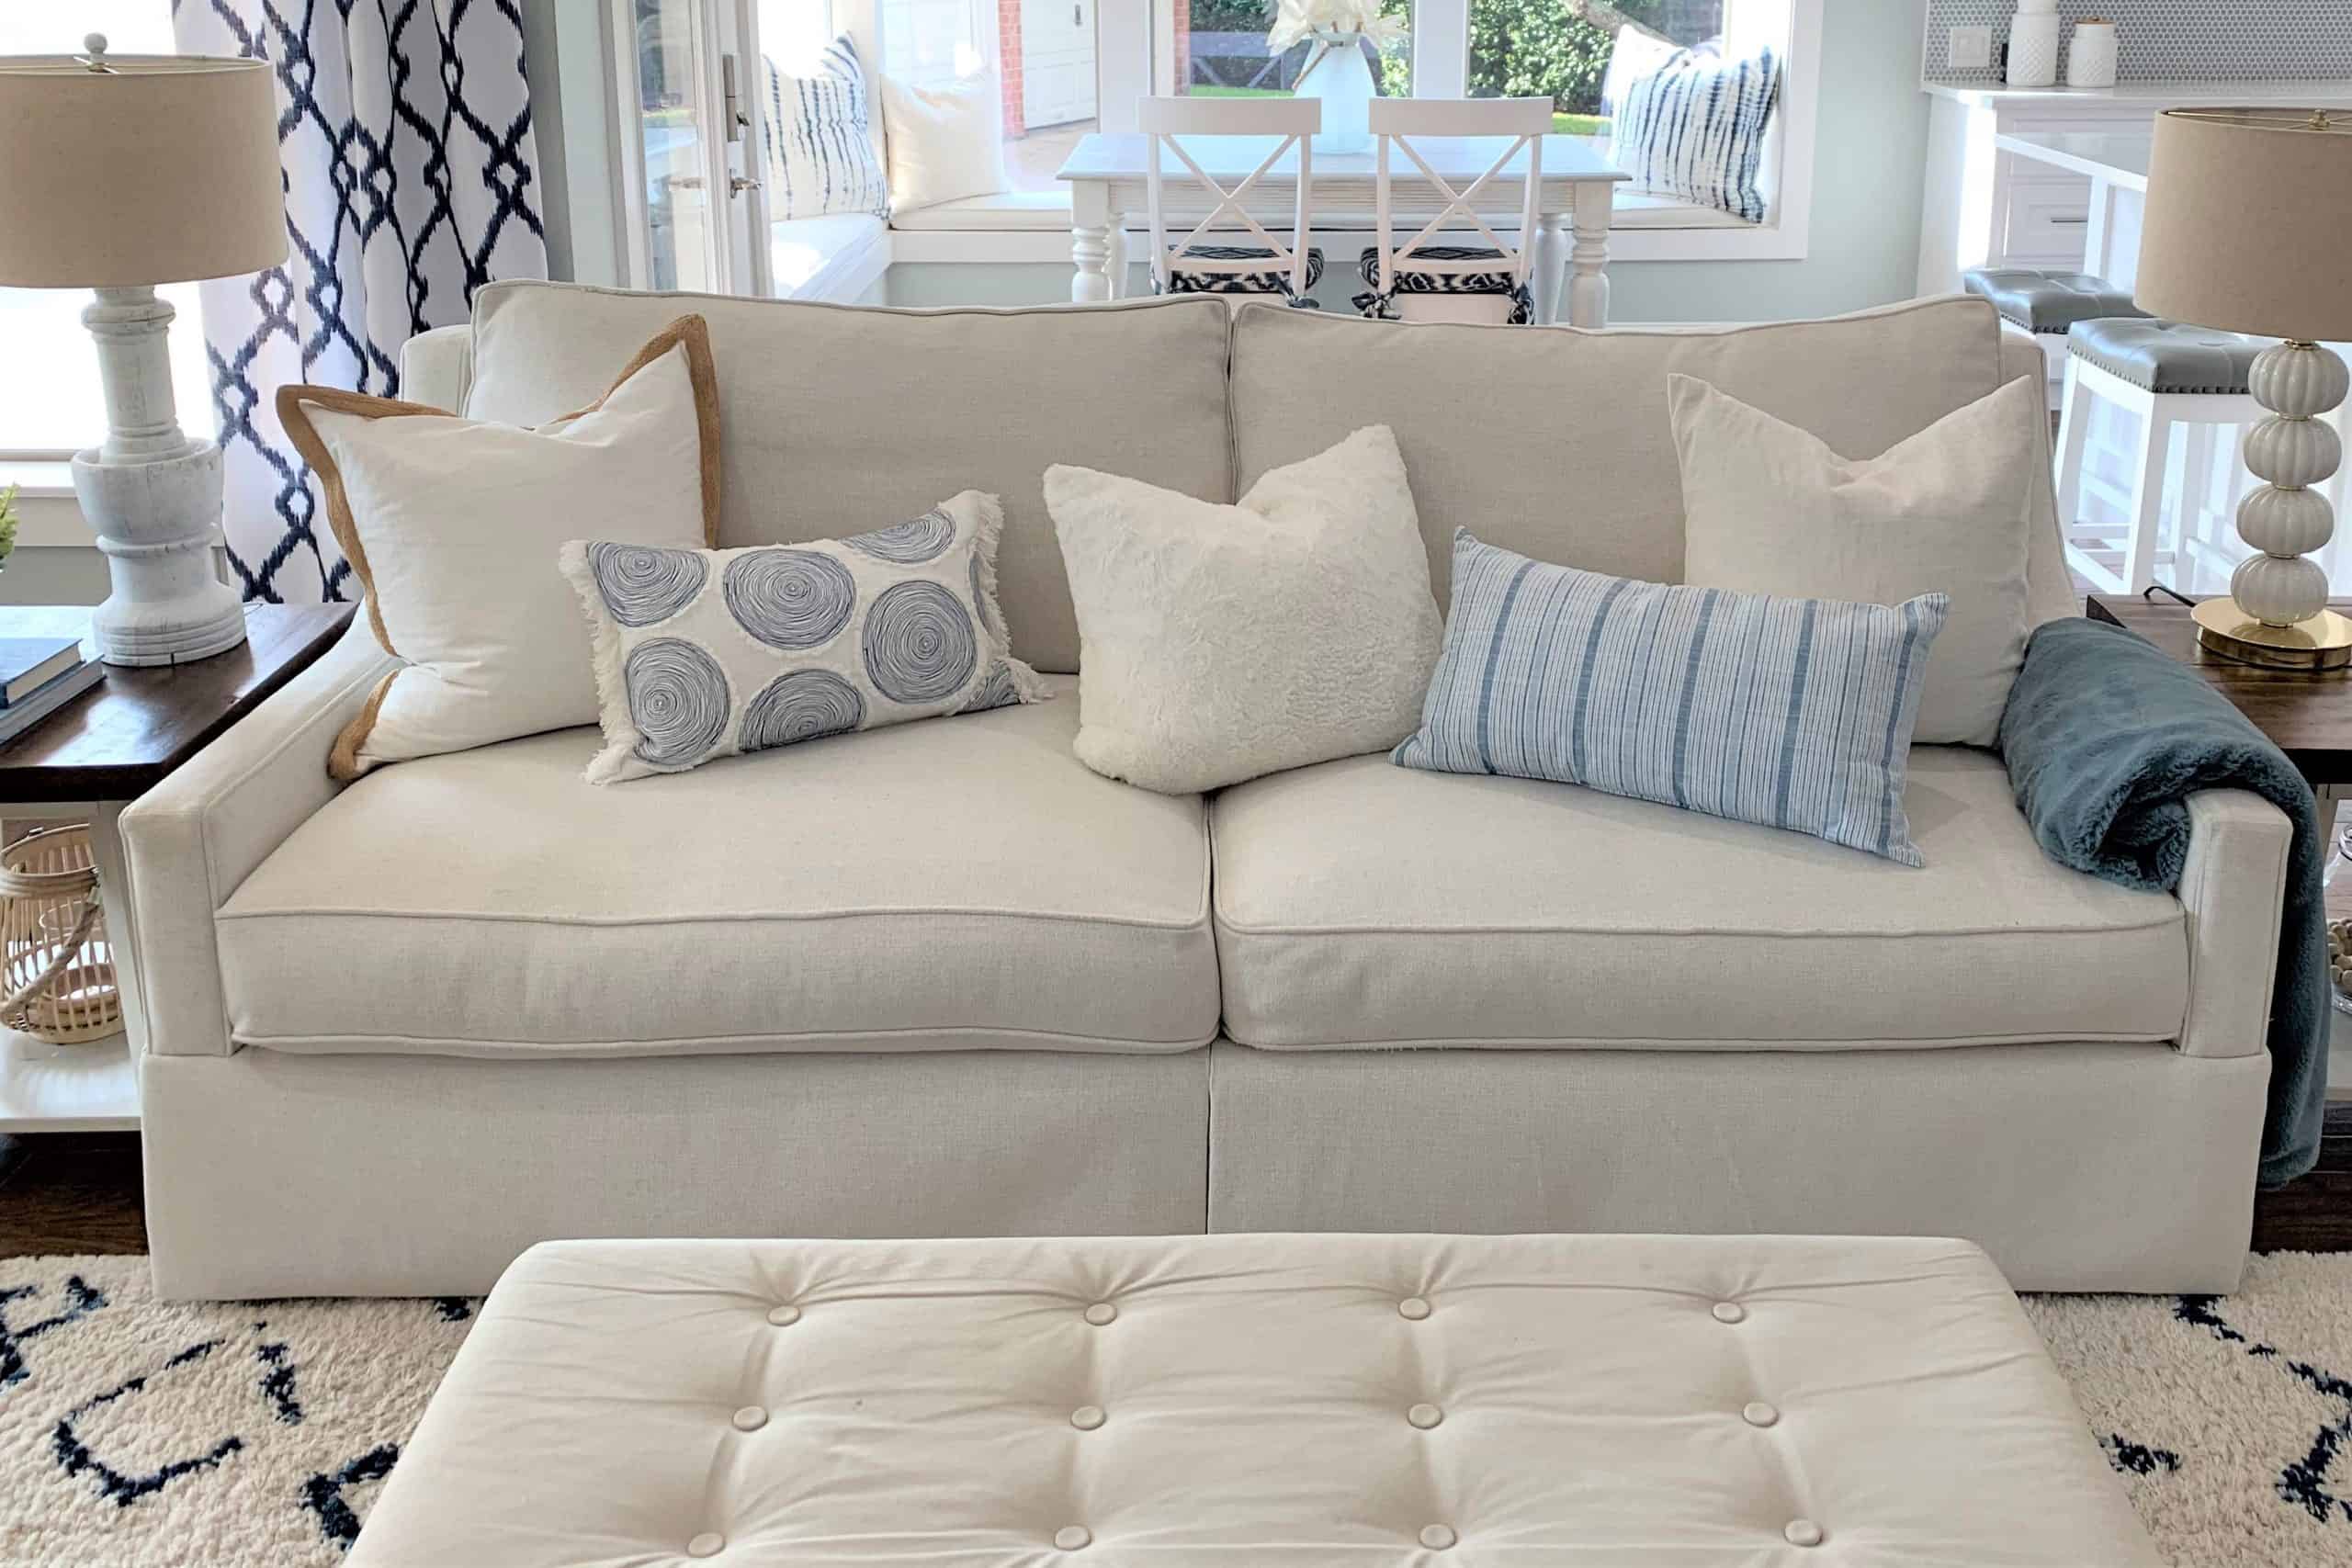 Where Can I Get My Sofa Cushions Restuffed